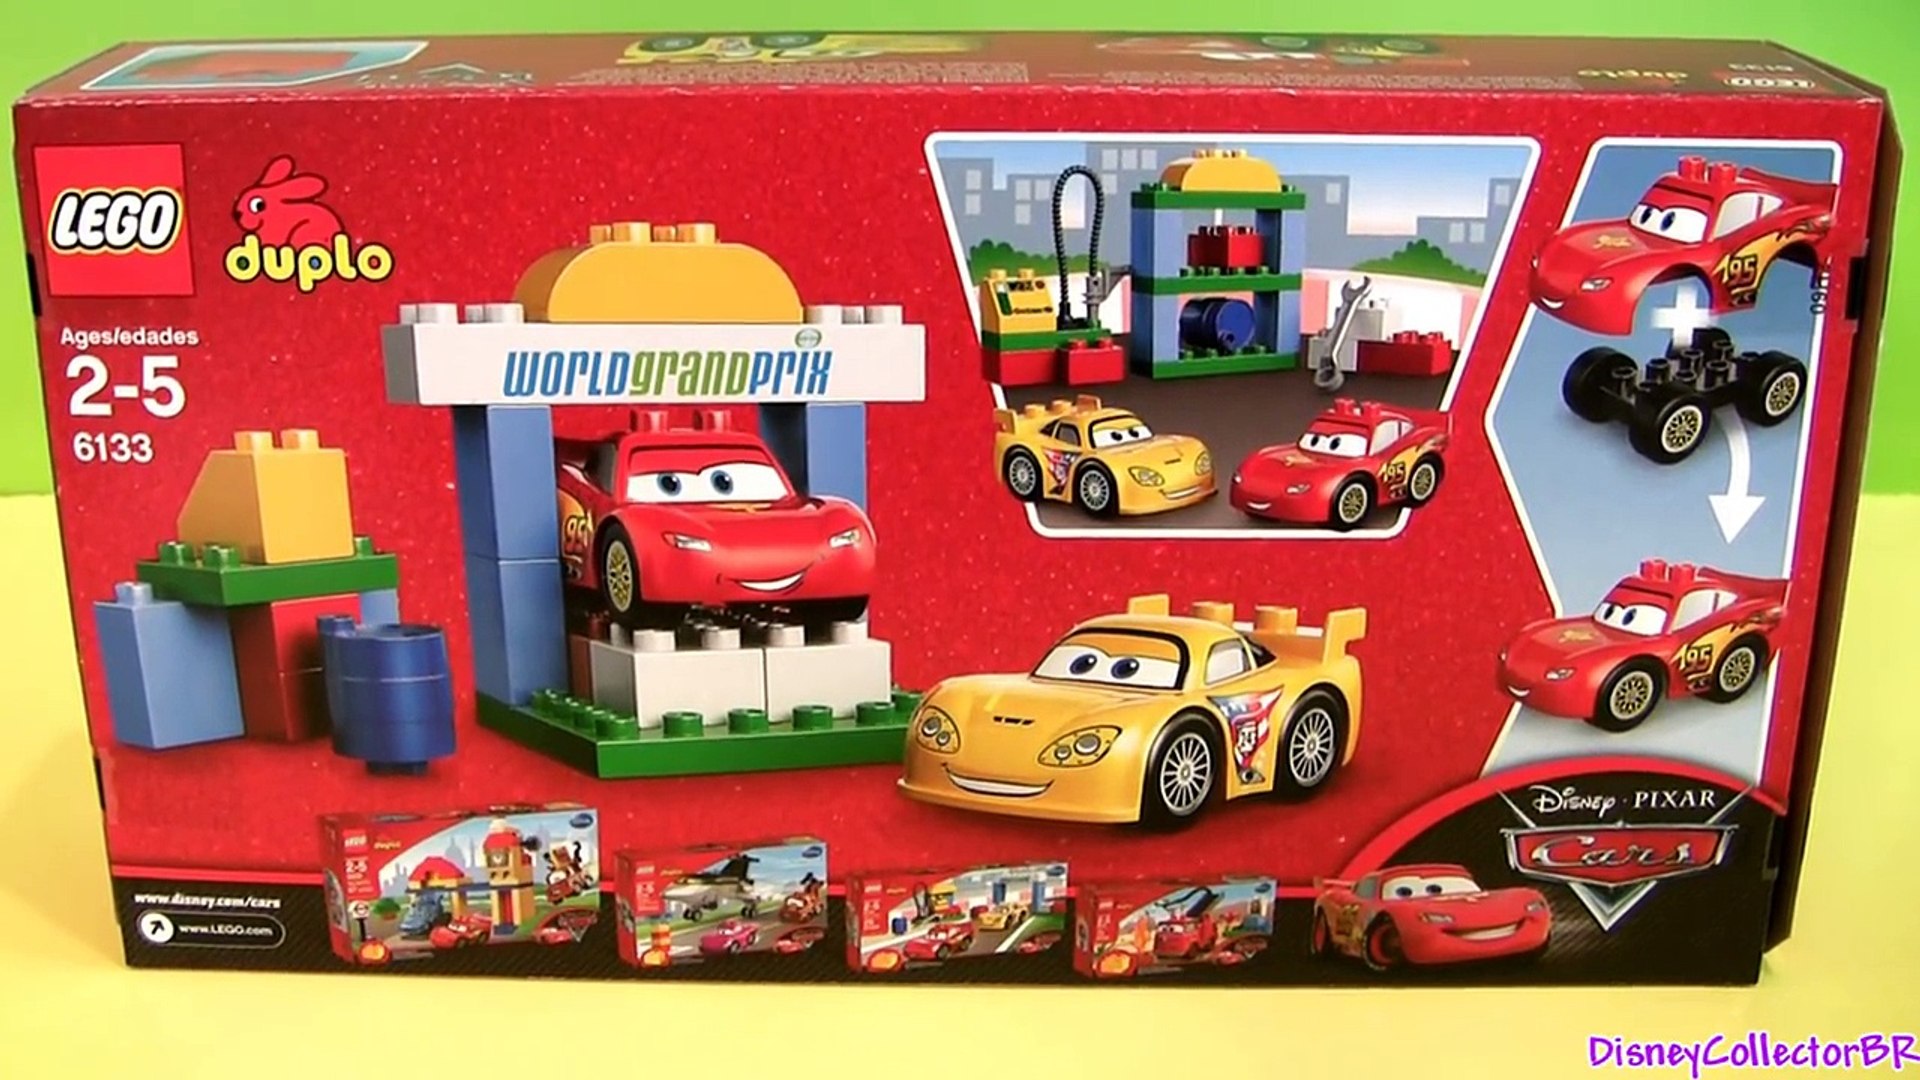 malm efterspørgsel Ofte talt Cars 2 LEGO Duplo Race Day Lightning McQueen 6133 Jeff Gorvette Disney  Builable Toys Pixar review - Dailymotion Video